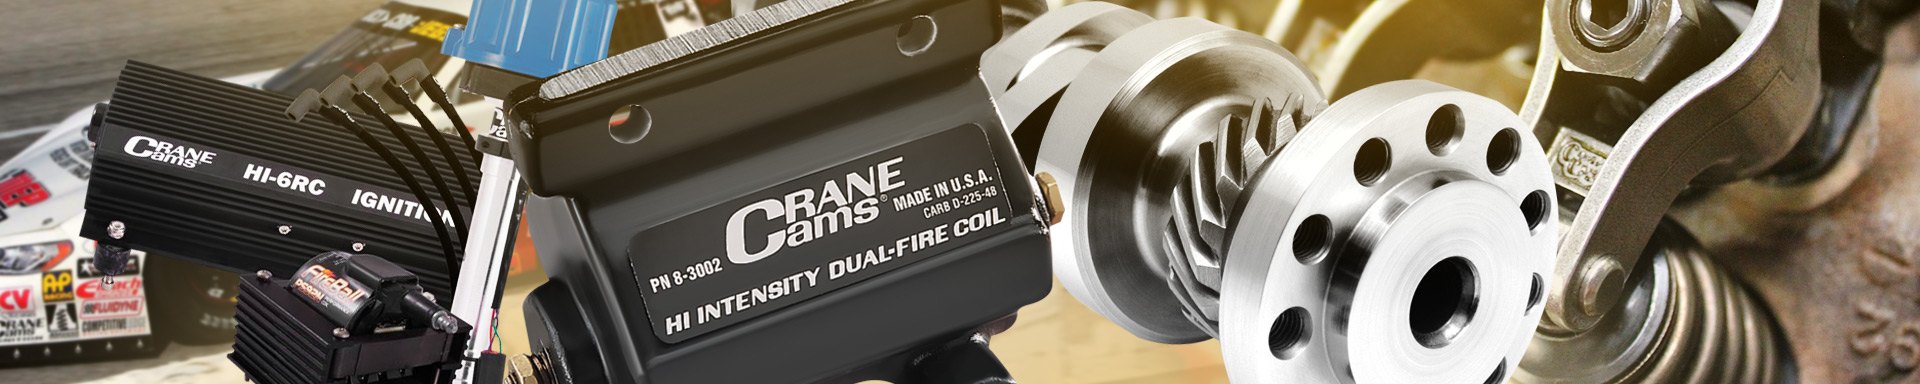 Crane Cams Engine Service Tools